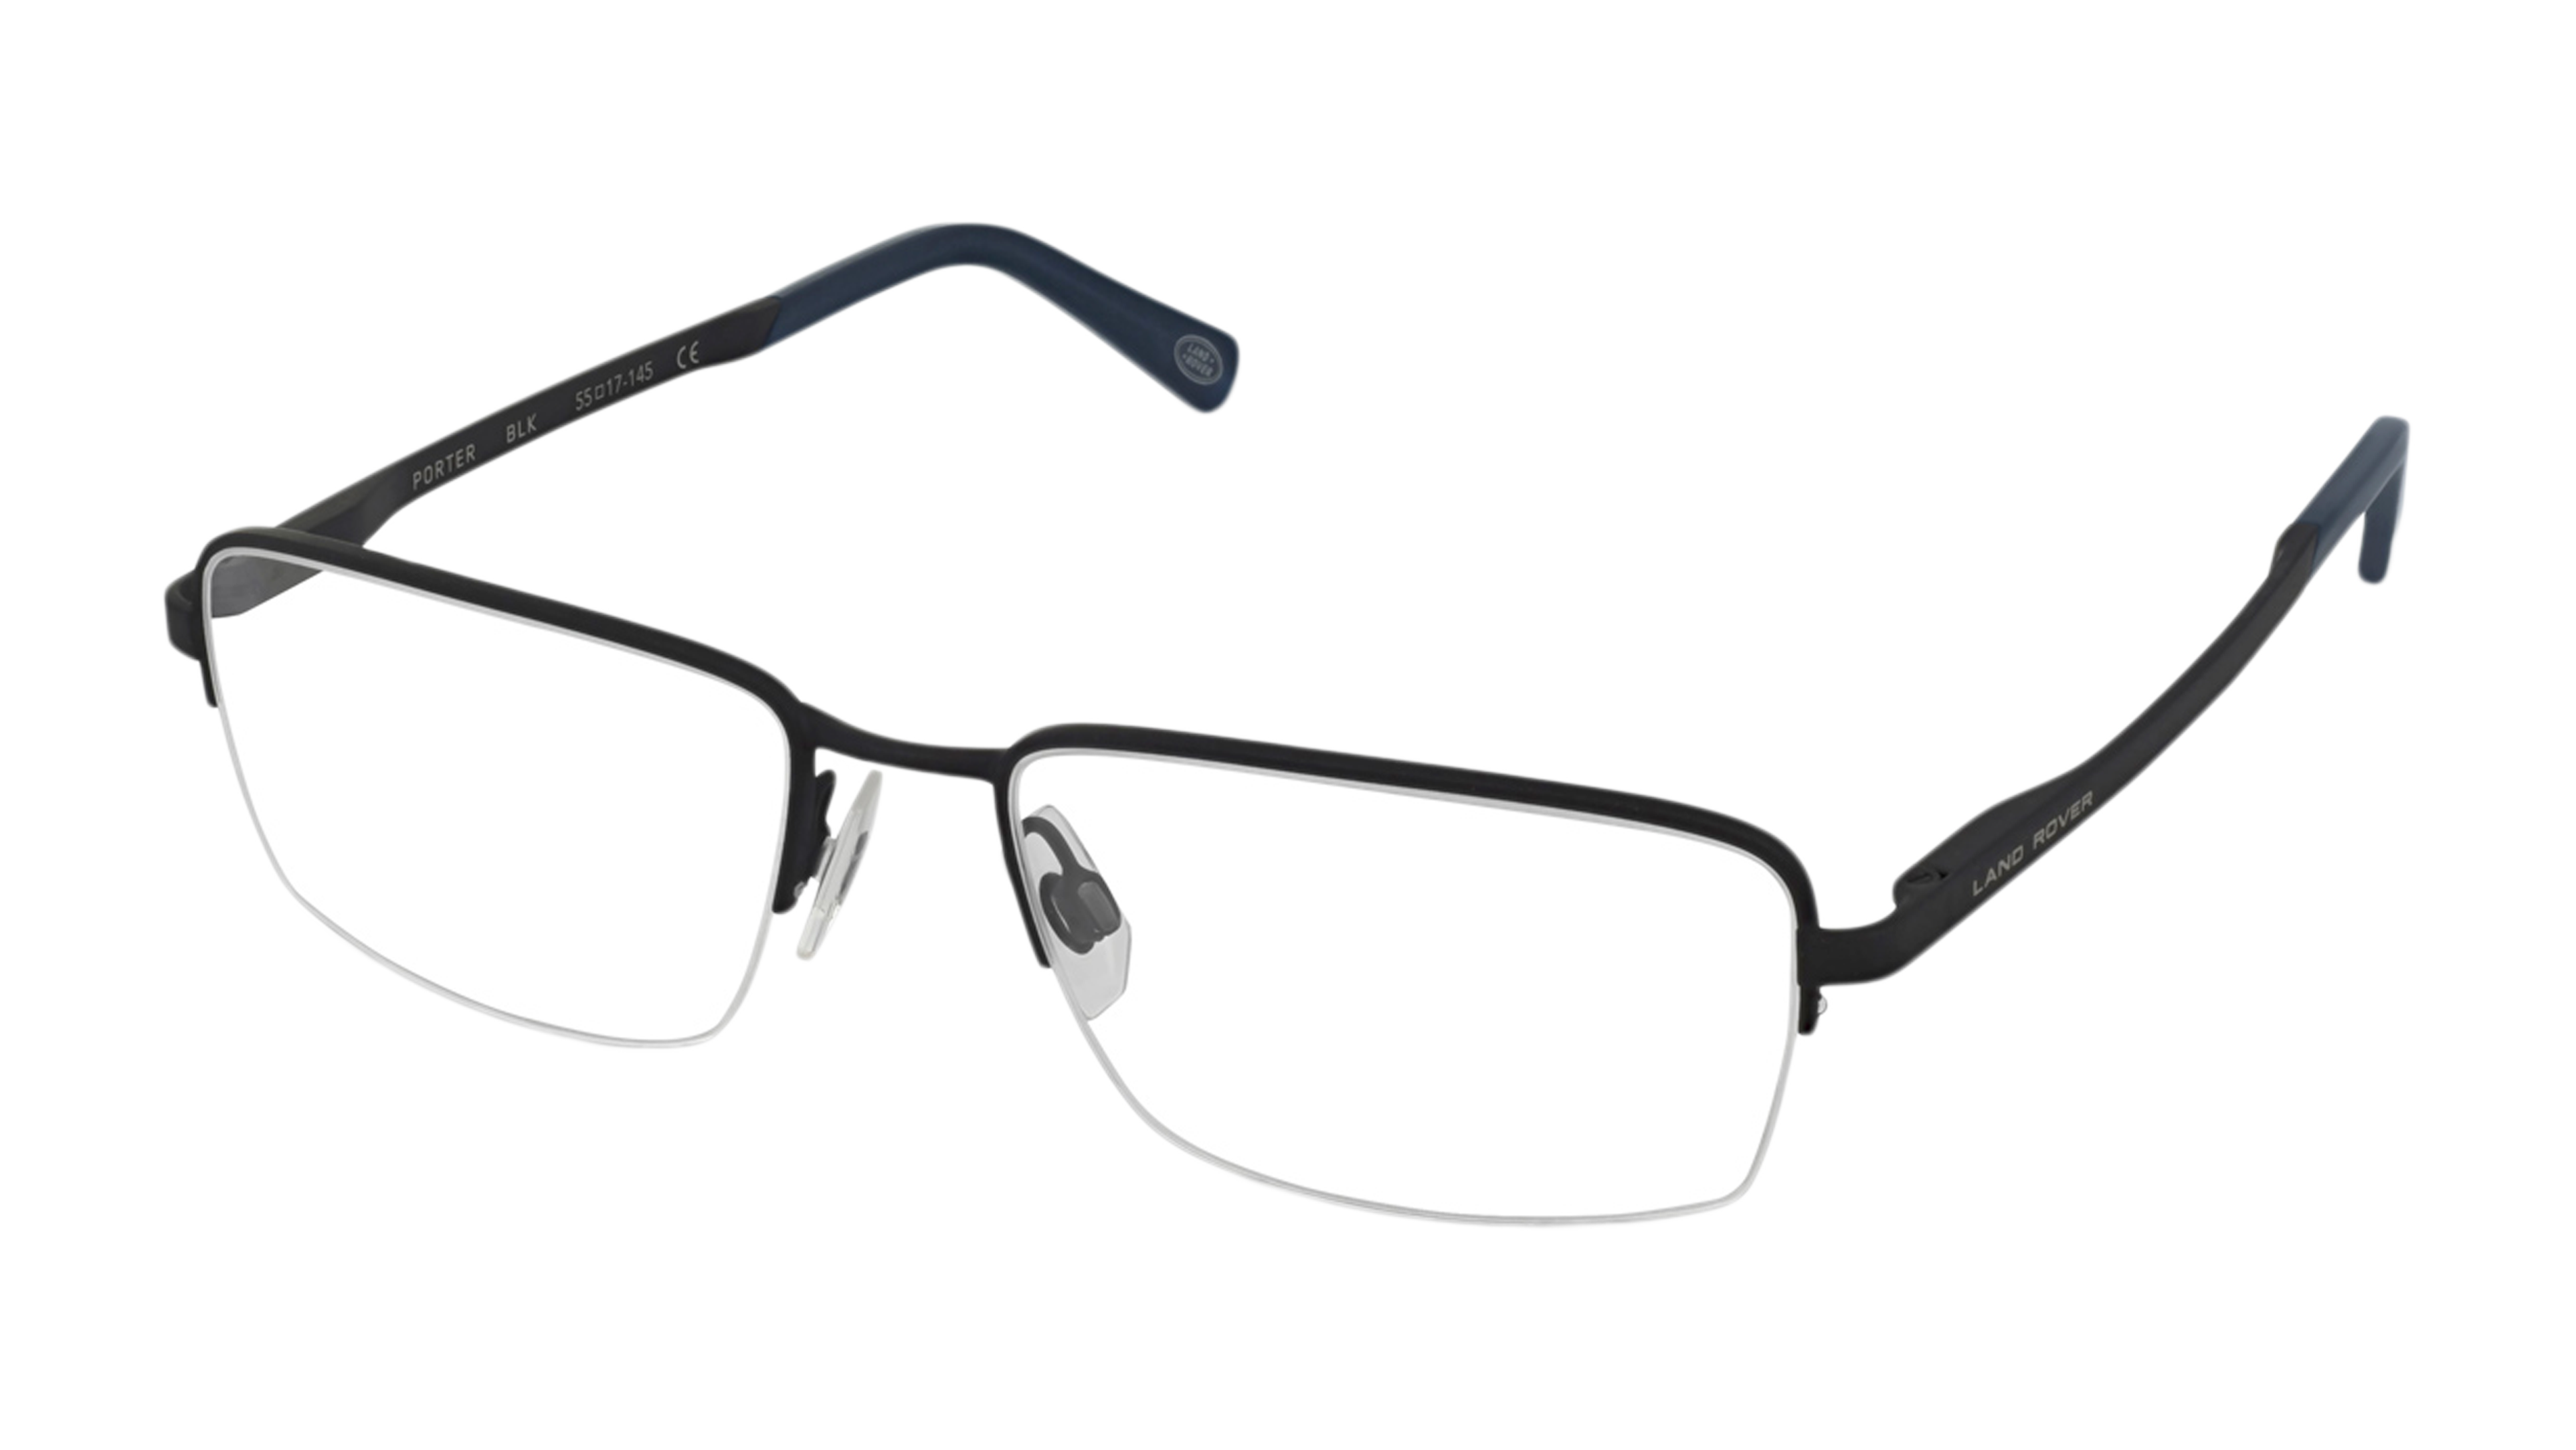 Angle_Left01 Land Rover Porter (Nvy) Glasses Transparent / Navy